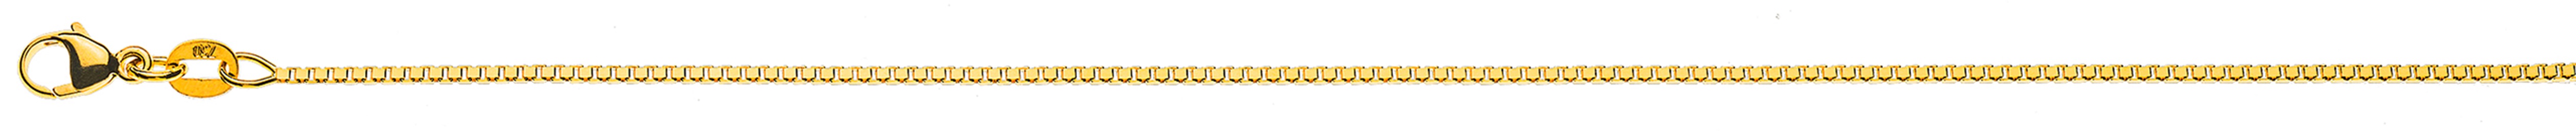 AURONOS Style Necklace yellow gold 9K Venetian chain diamond cut 55cm 1.1mm